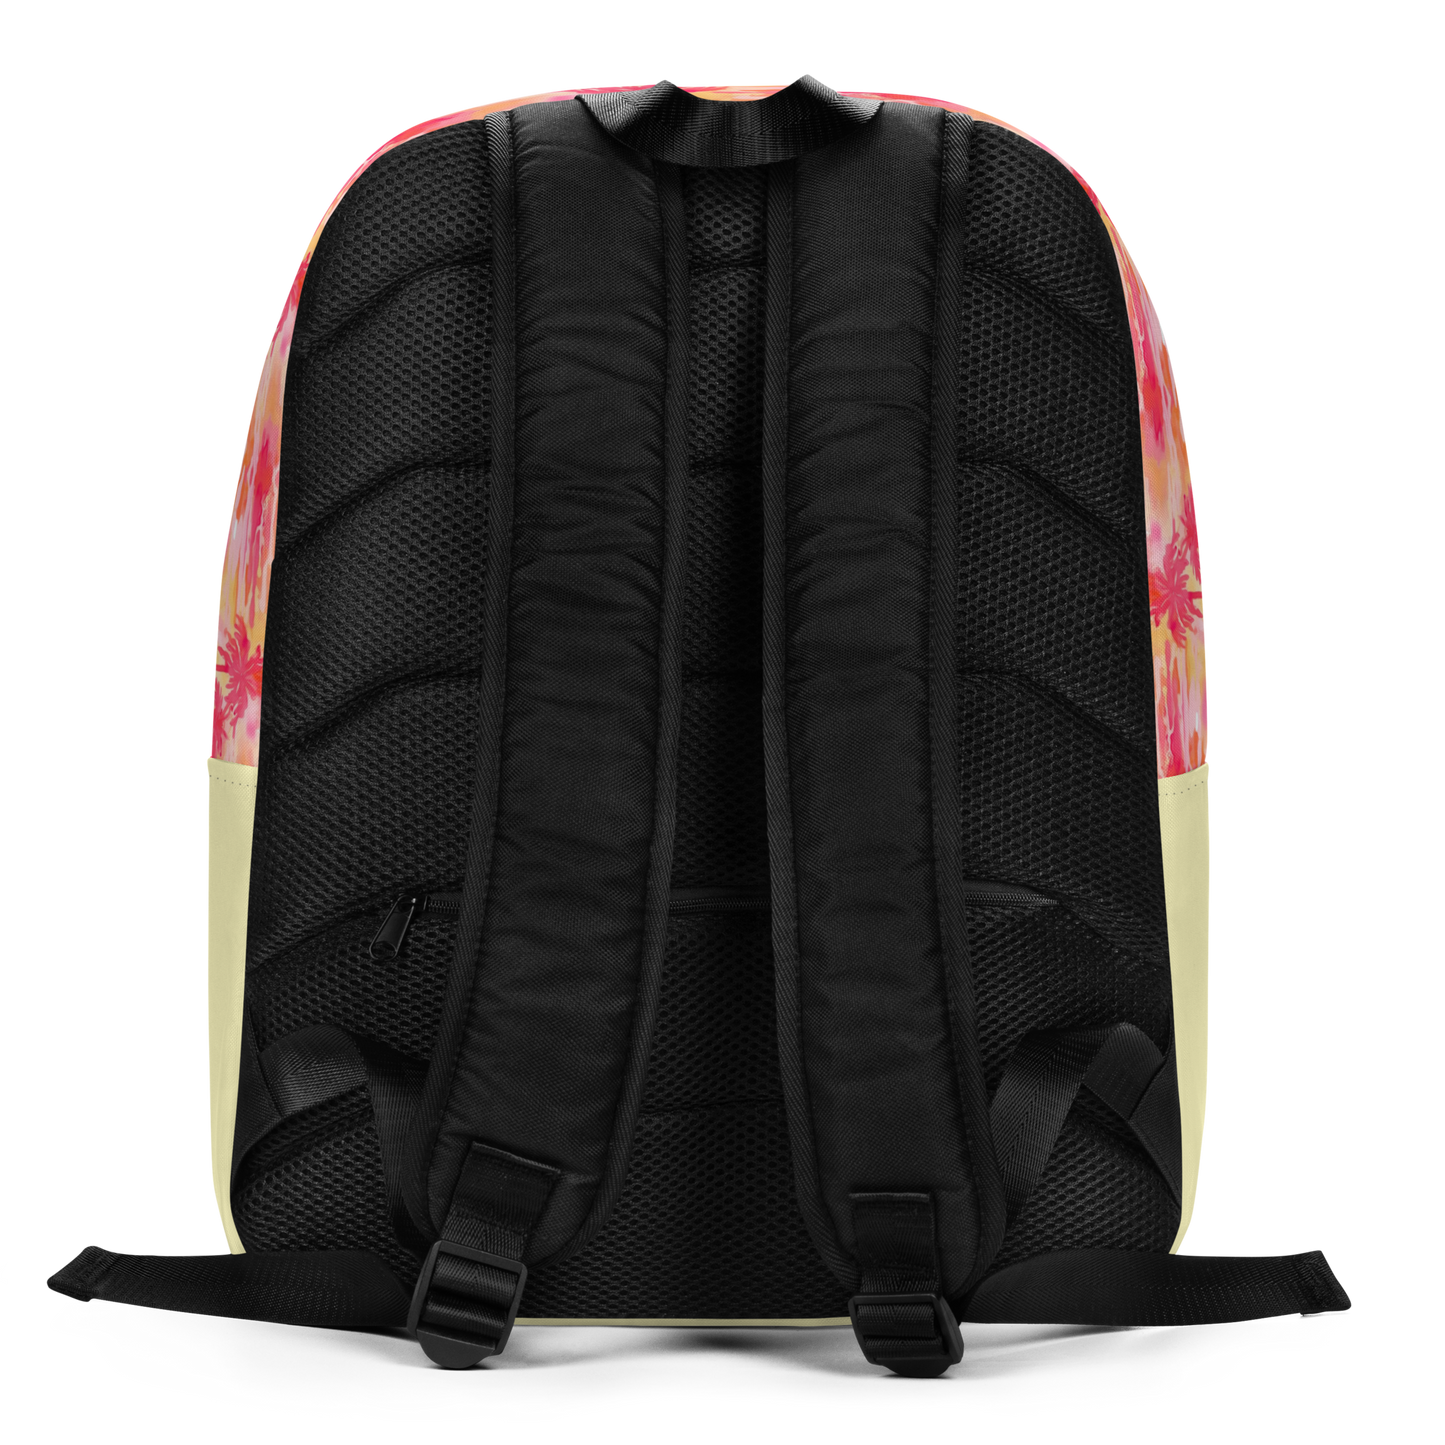 El Caballote Minimalist Backpack, Backpack with 15" inside pocket for Laptop, Hidden Pocket for Wallet, Lightweight well made